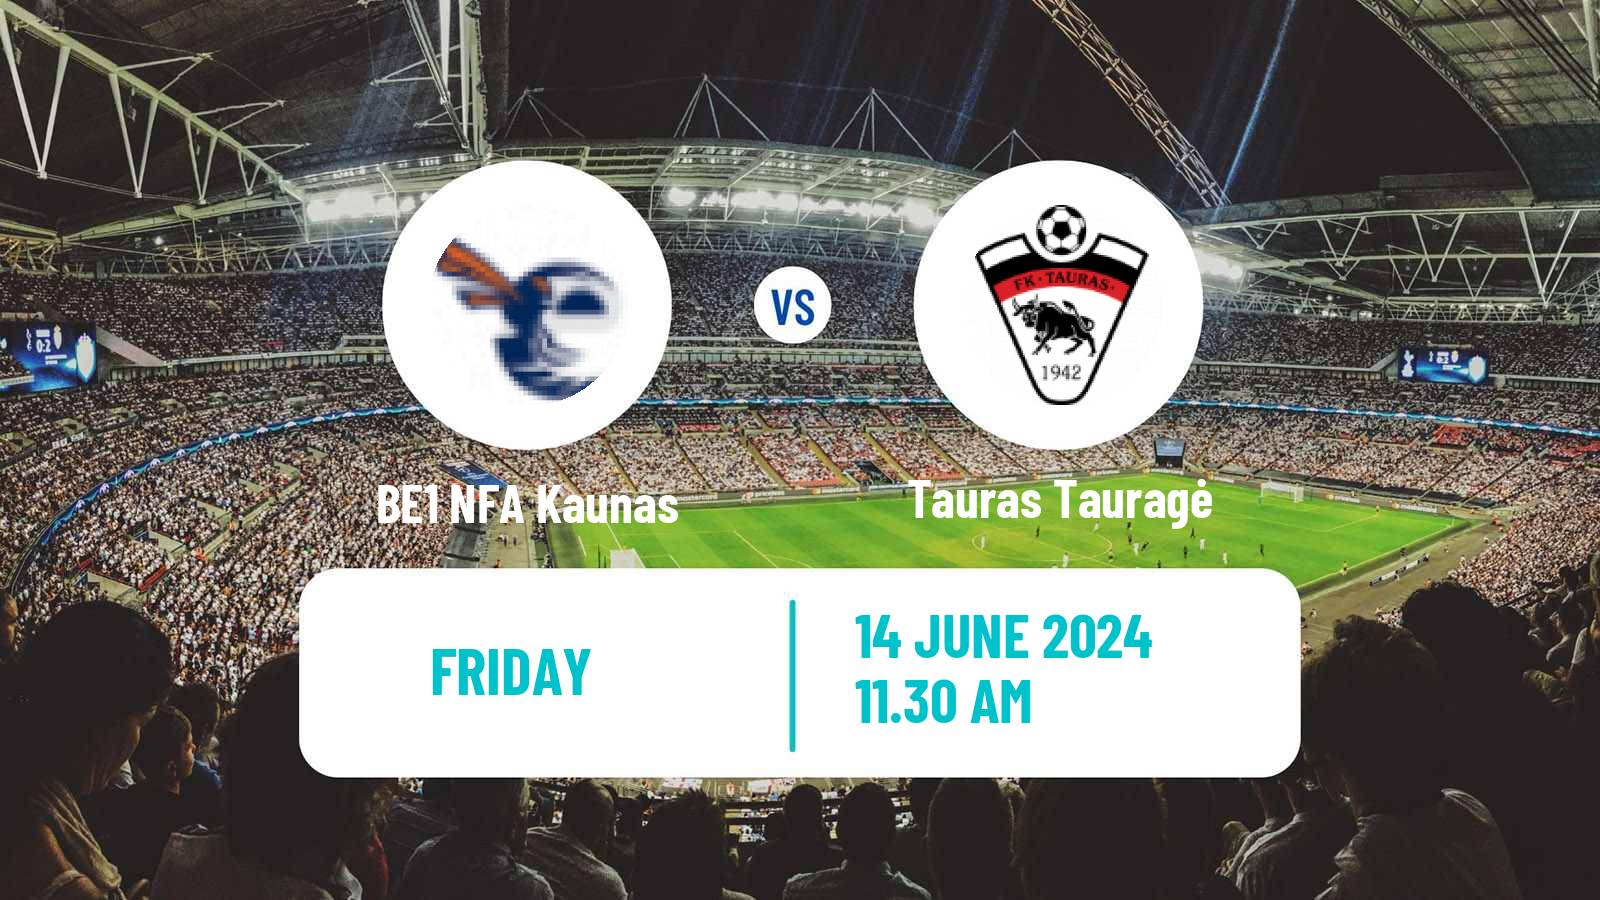 Soccer Lithuanian Division 2 BE1 NFA Kaunas - Tauras Tauragė